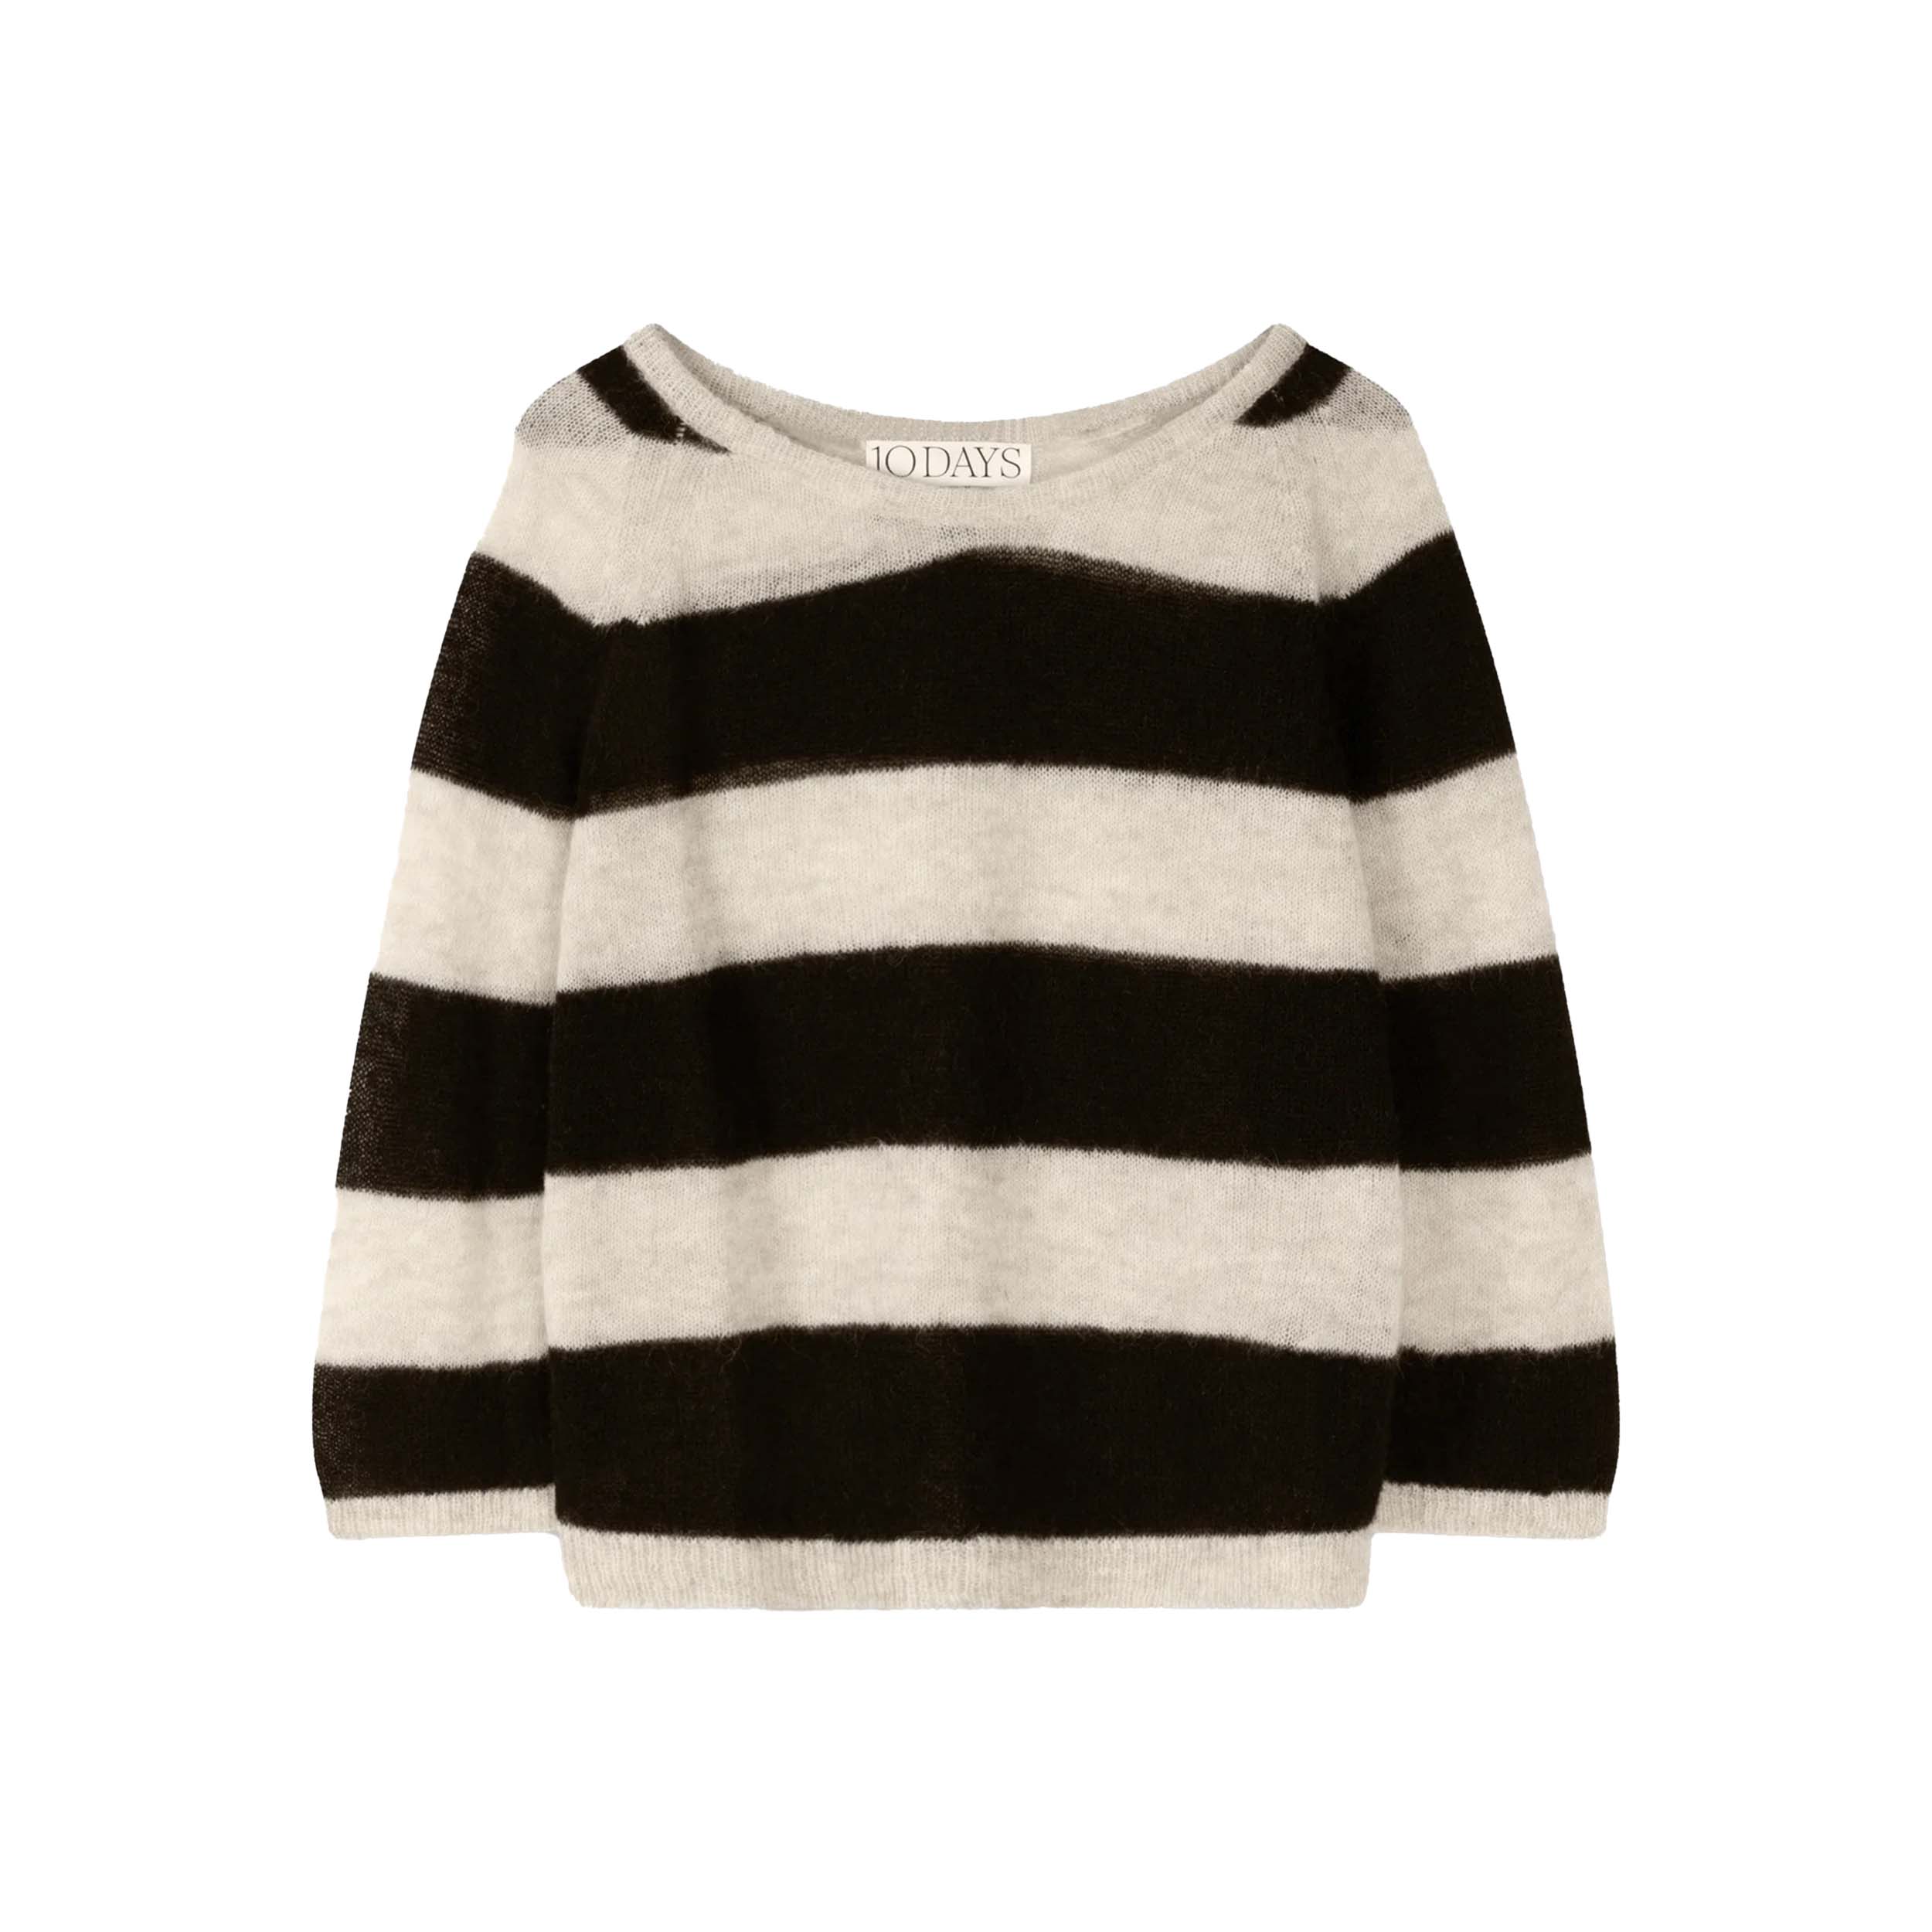 10DAYS 20-606-4202 Sweater Thin Knit Stripes Safari/Black